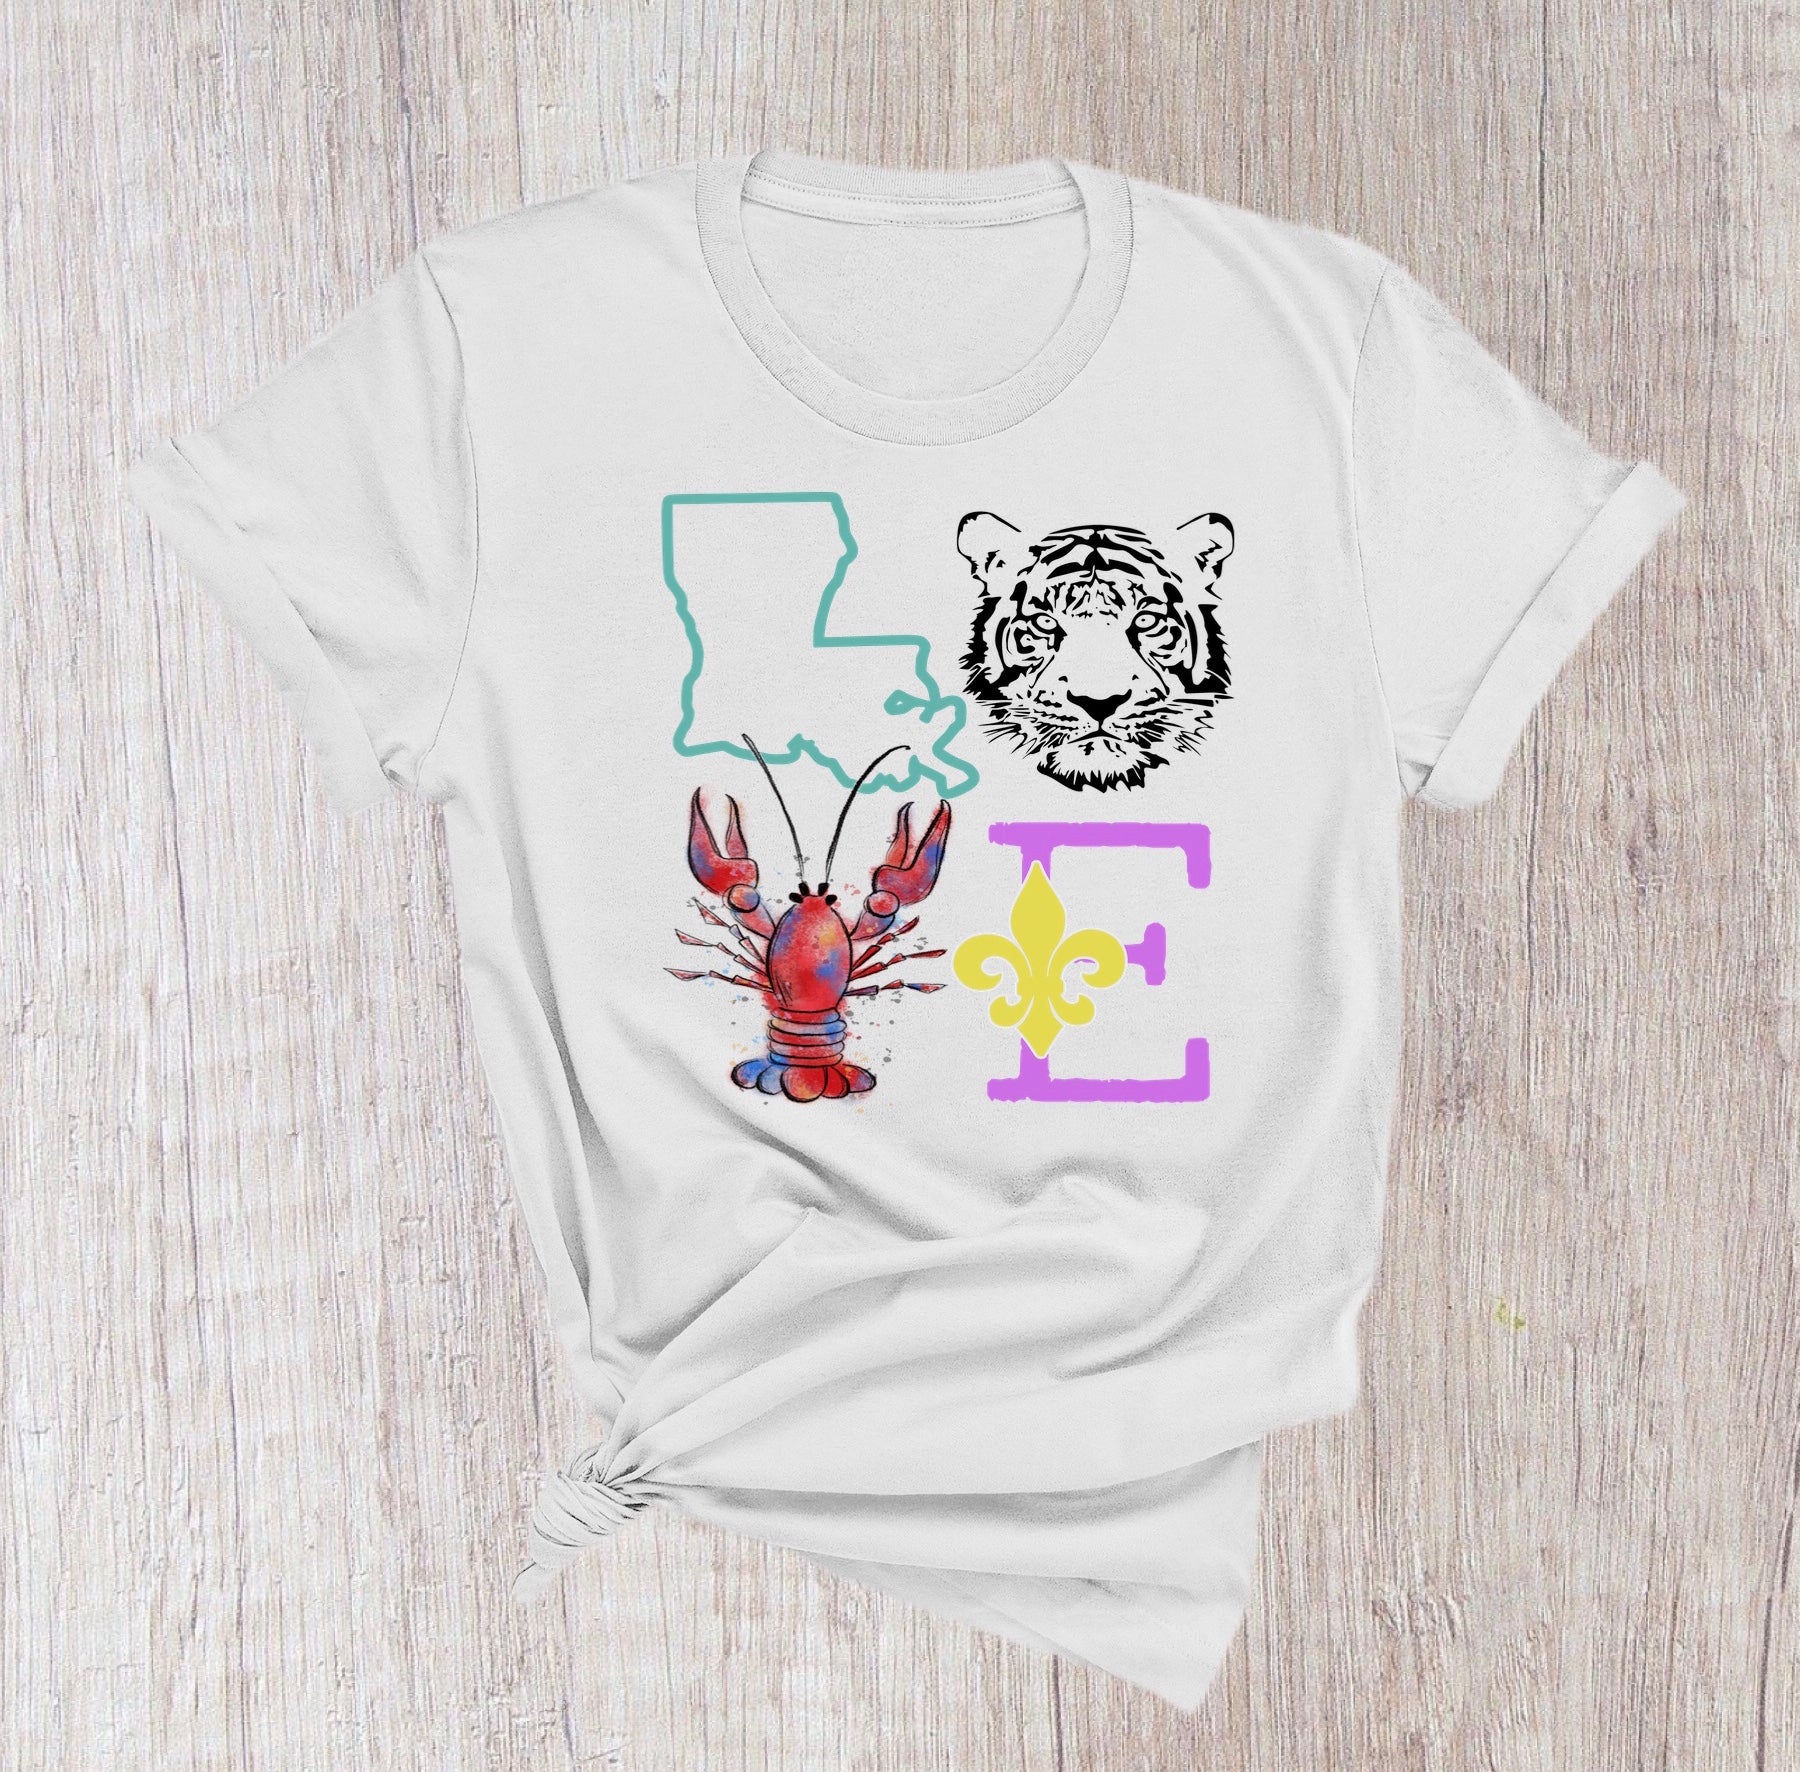 I Love You Louisiana T-Shirt - DNO Unisex XL / Sage